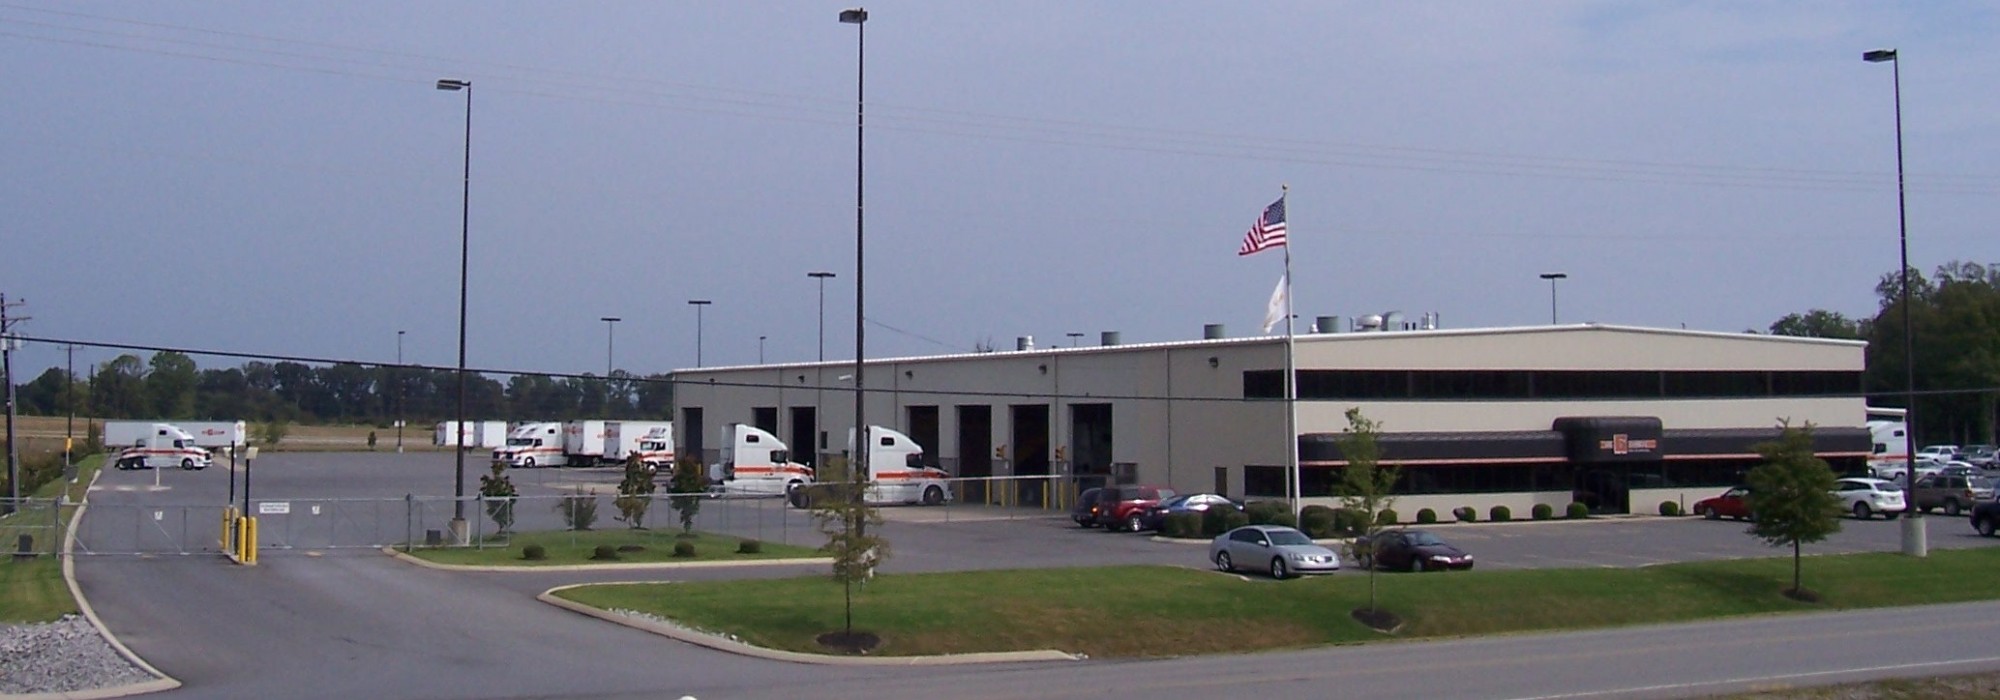 Big G Express Gladeville, TN/840 Facility